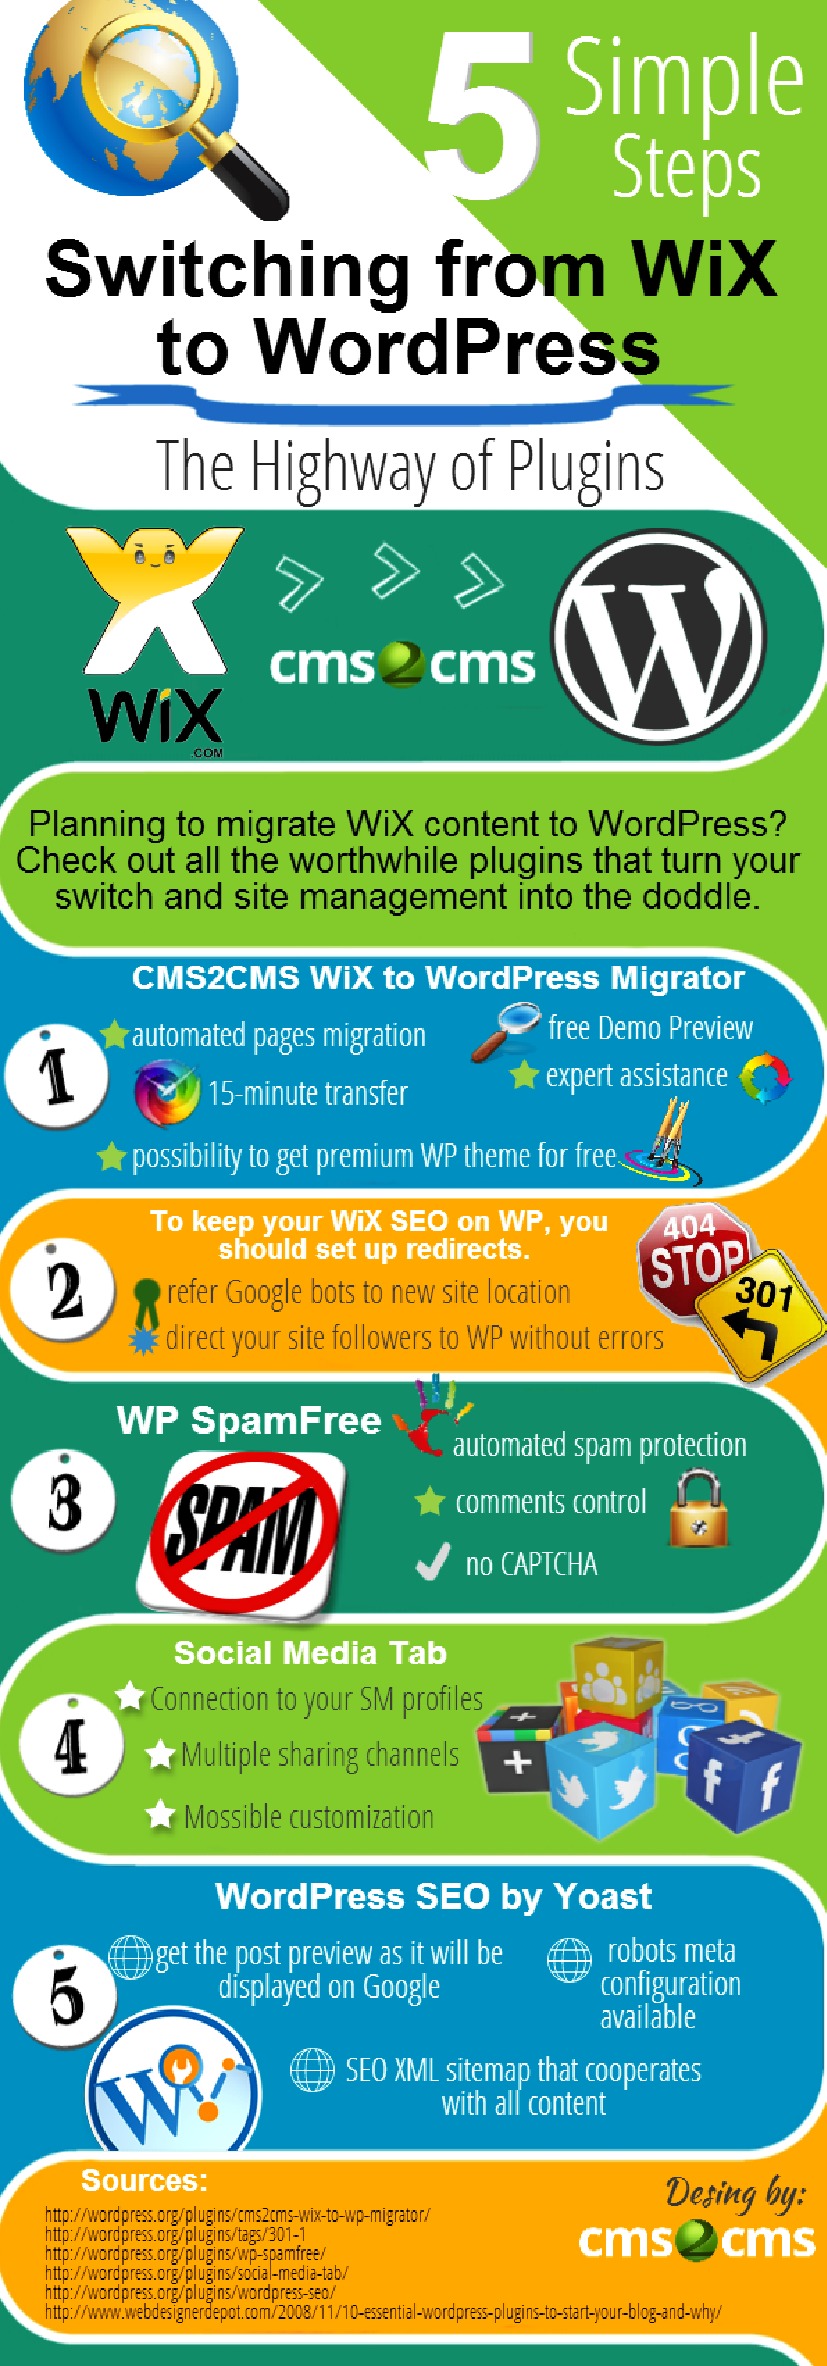 wix-to-wordpress-cms2cms-plugin-guide